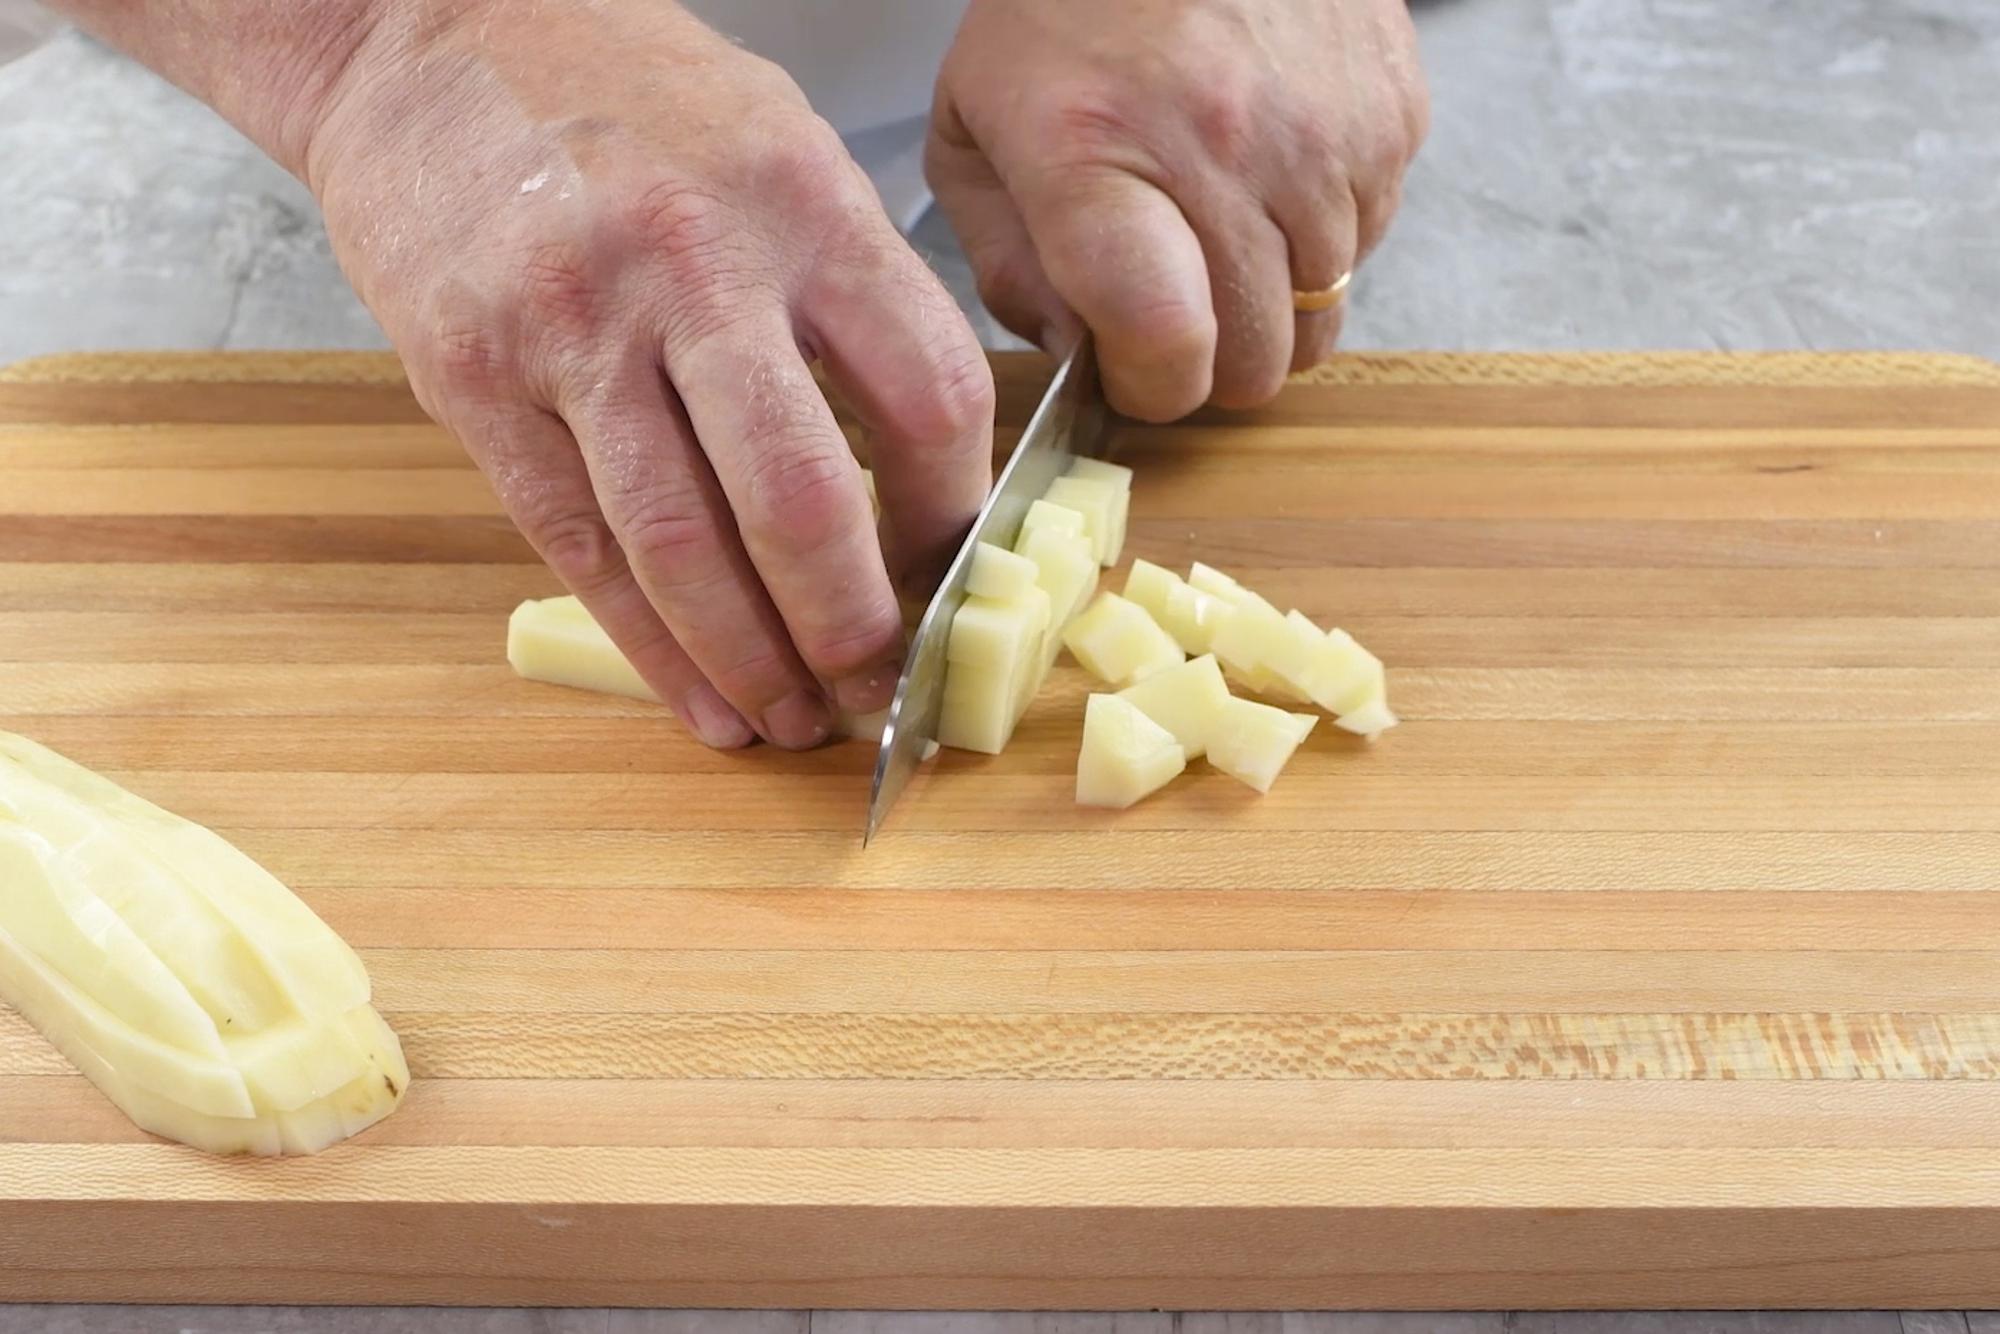 How to Cut Potatoes 3 Ways